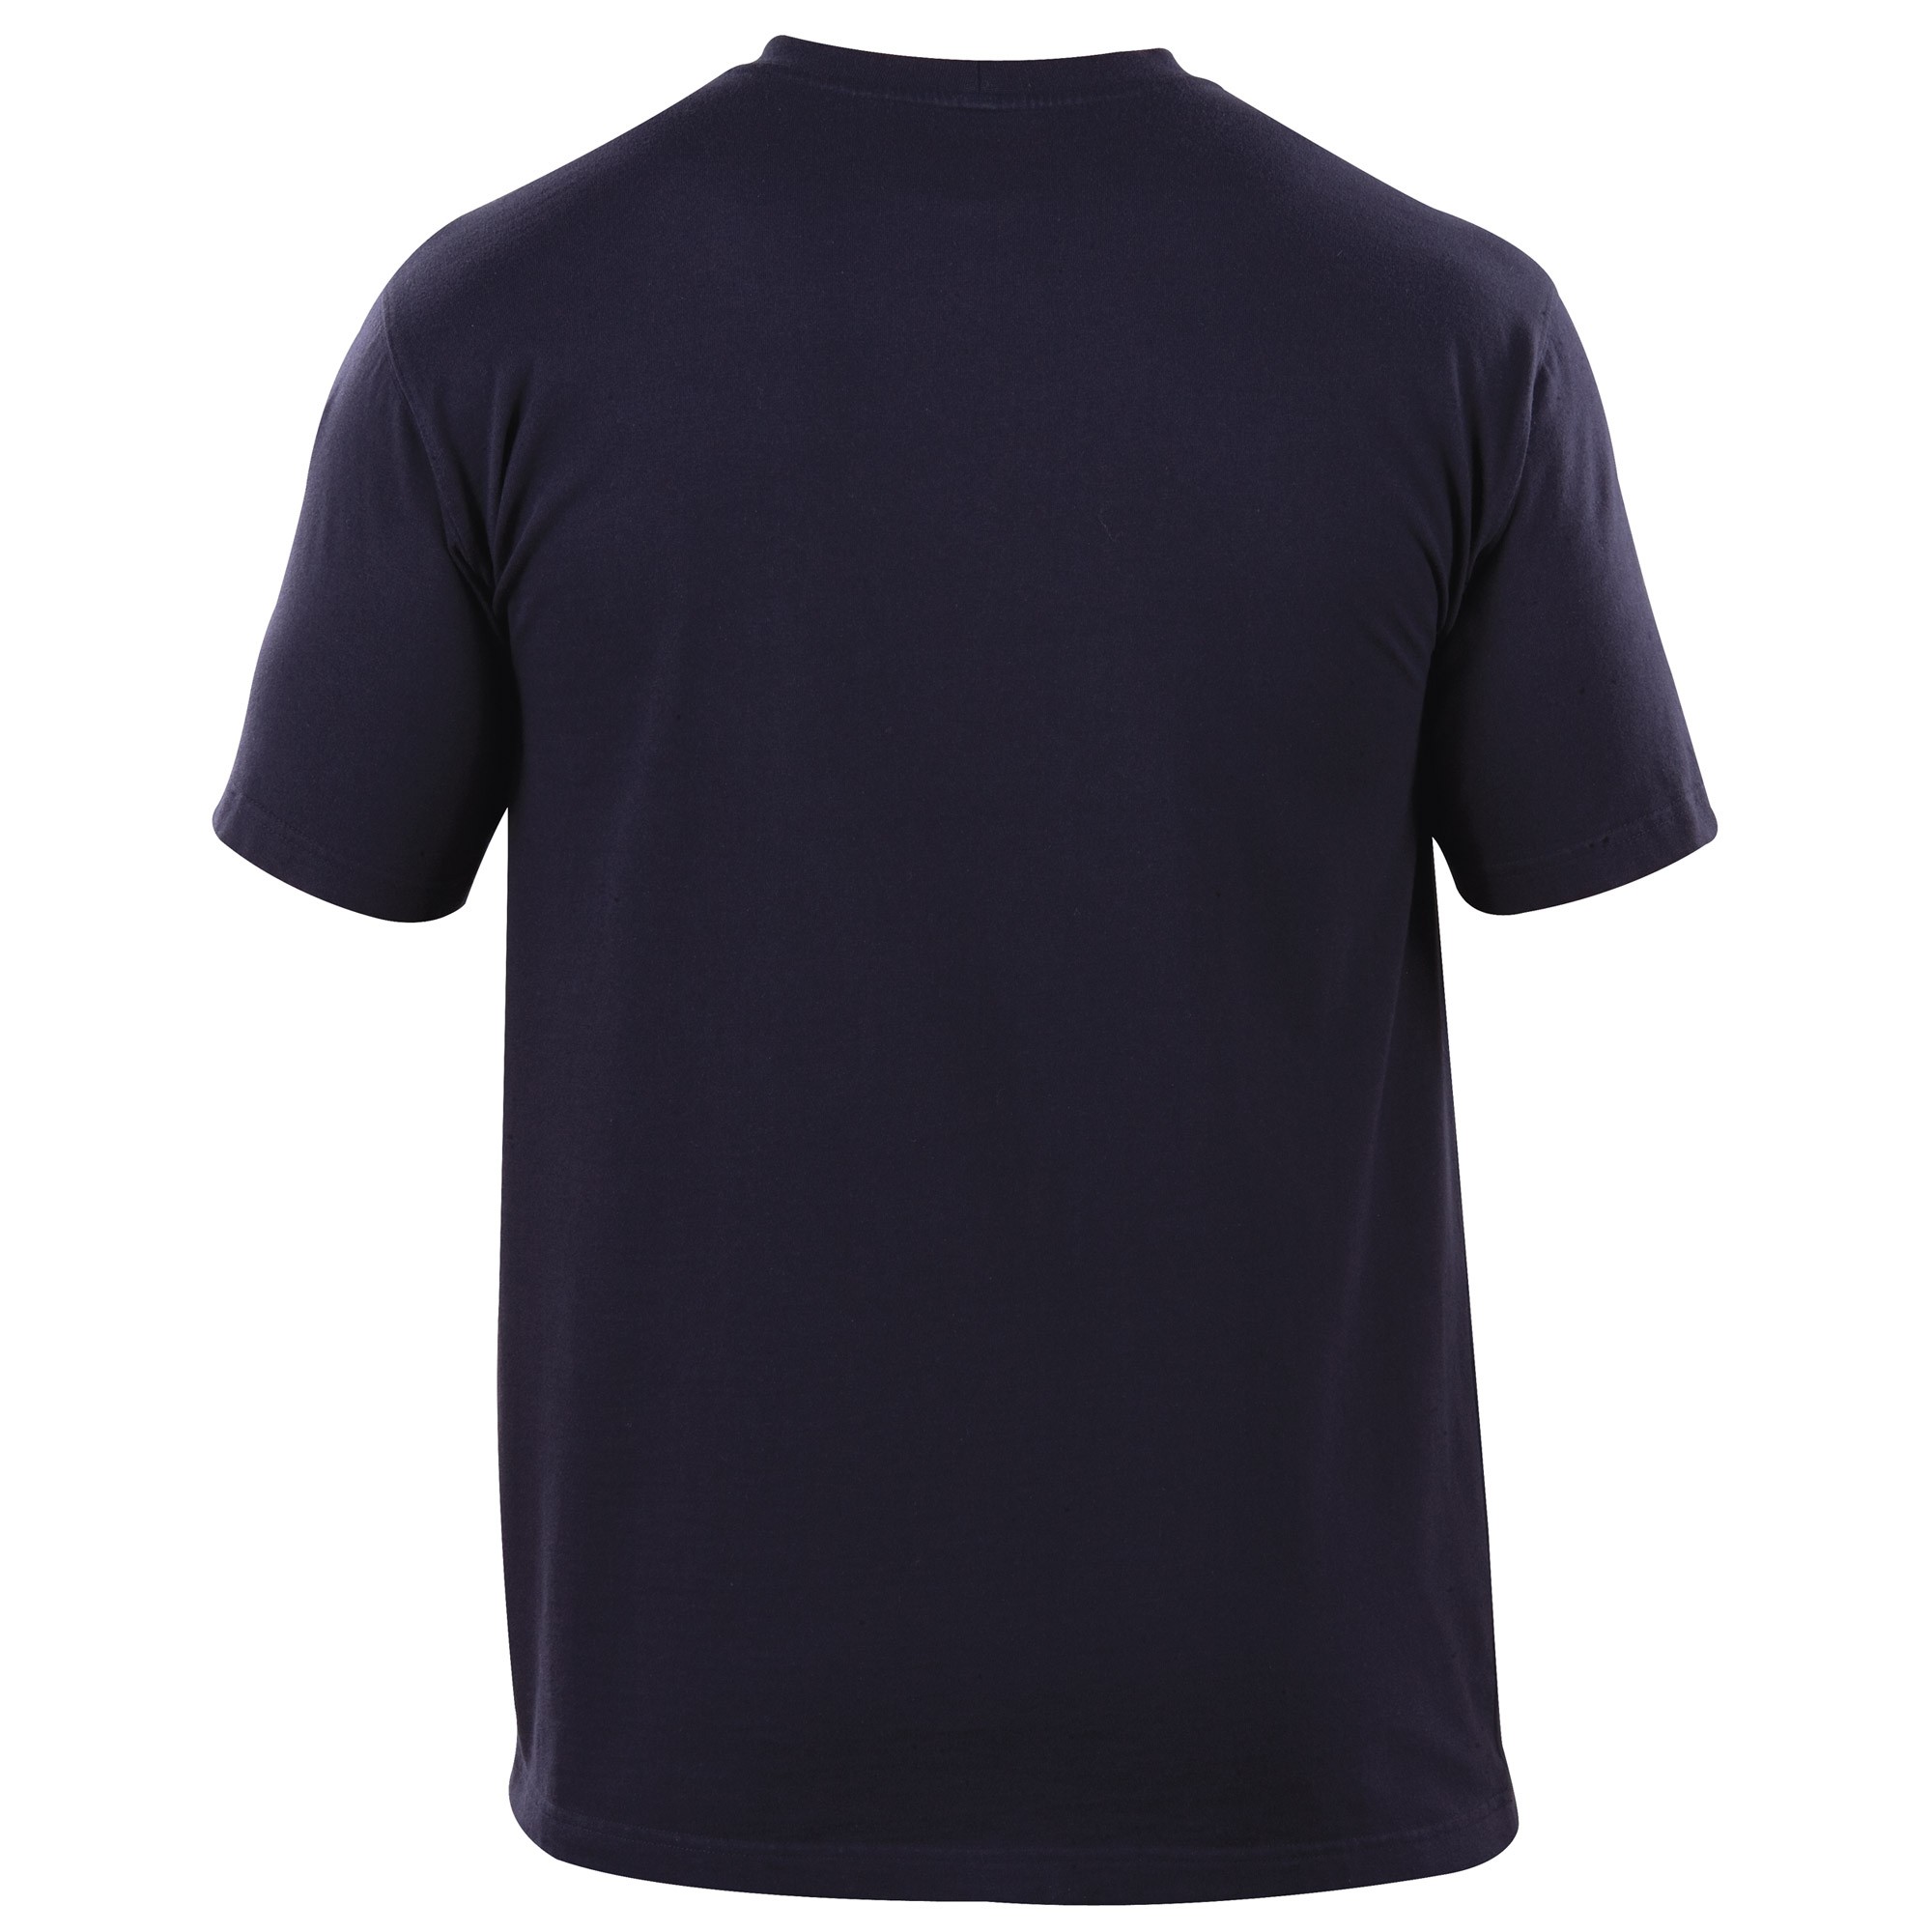 5.11 Professional T-Shirt – Short Sleeve